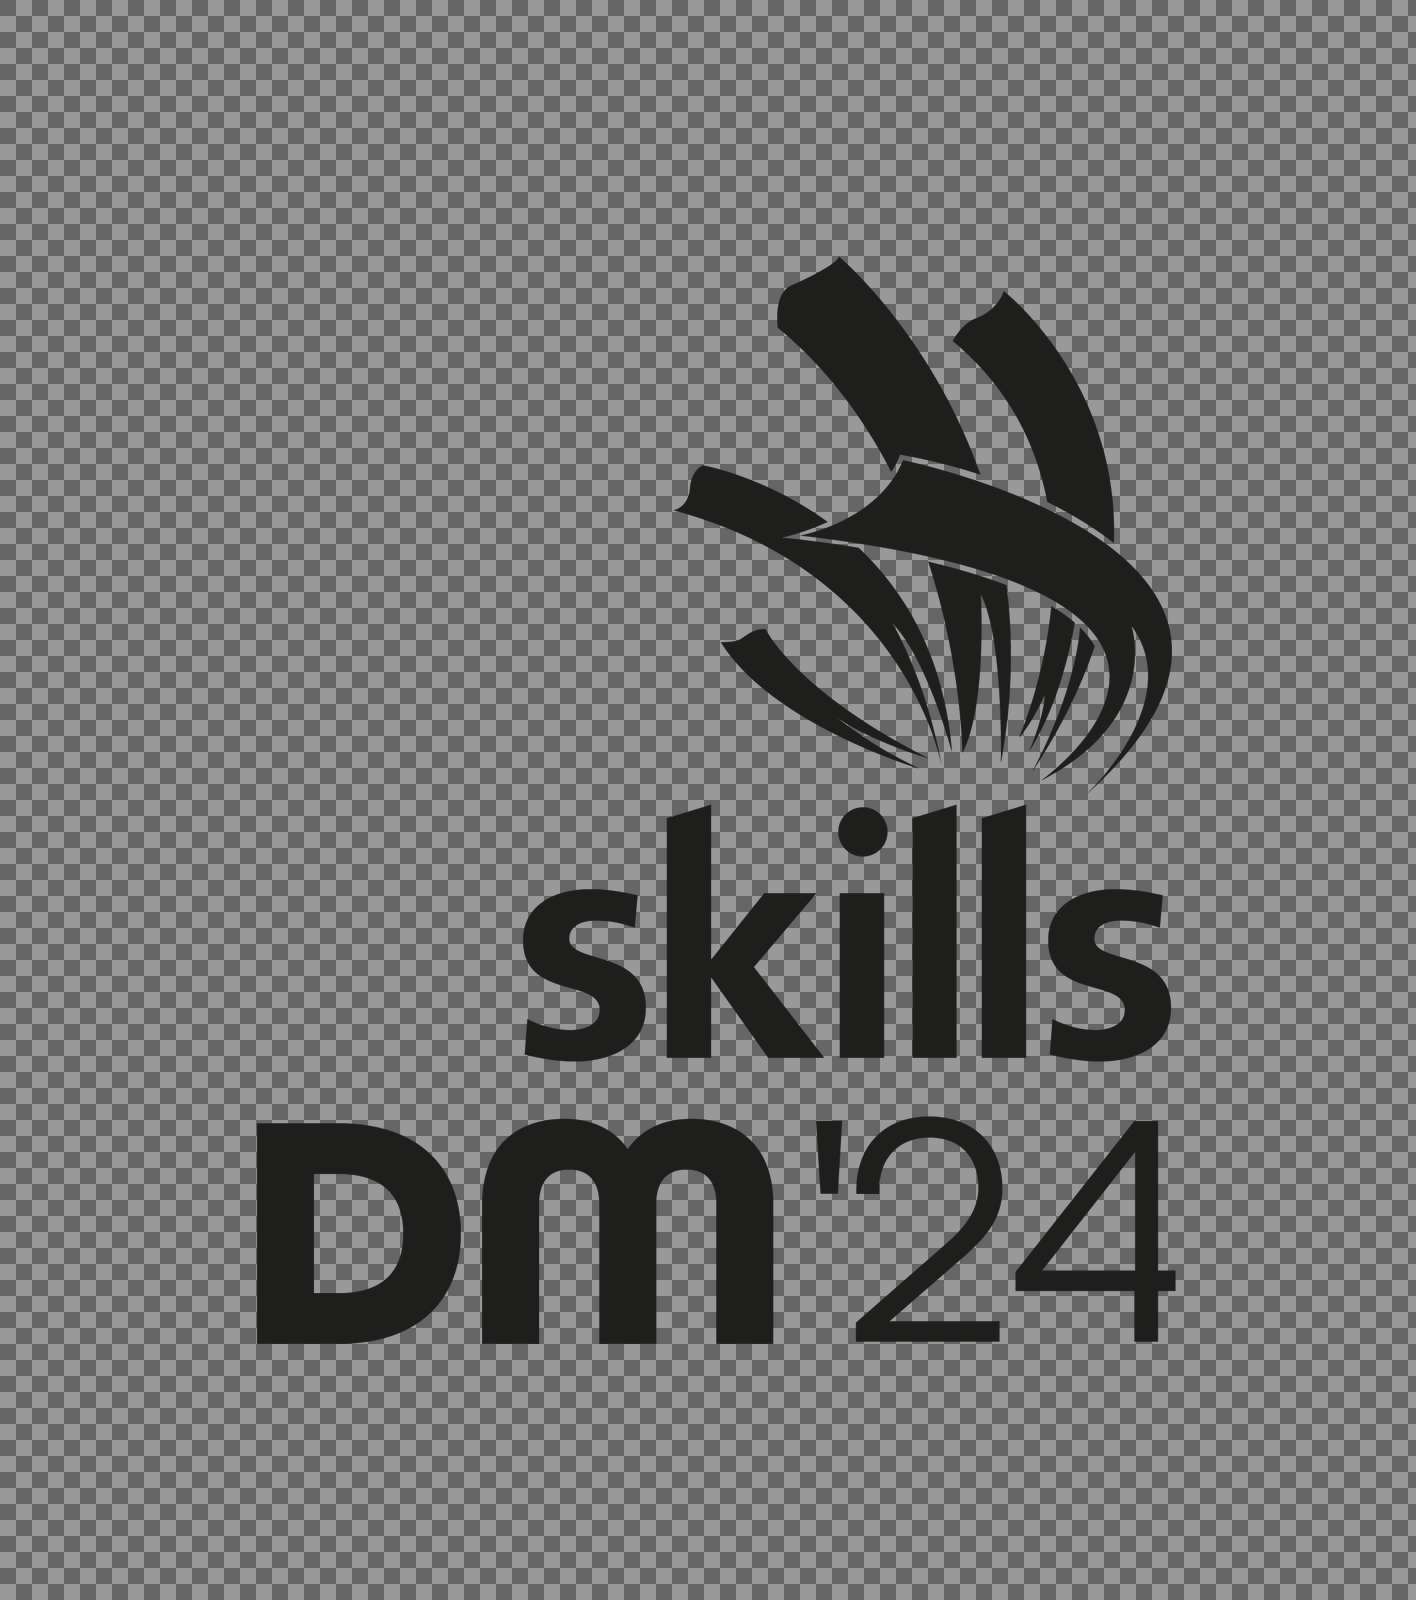 SkillsDM24   logo   RGB   Version 03   sort